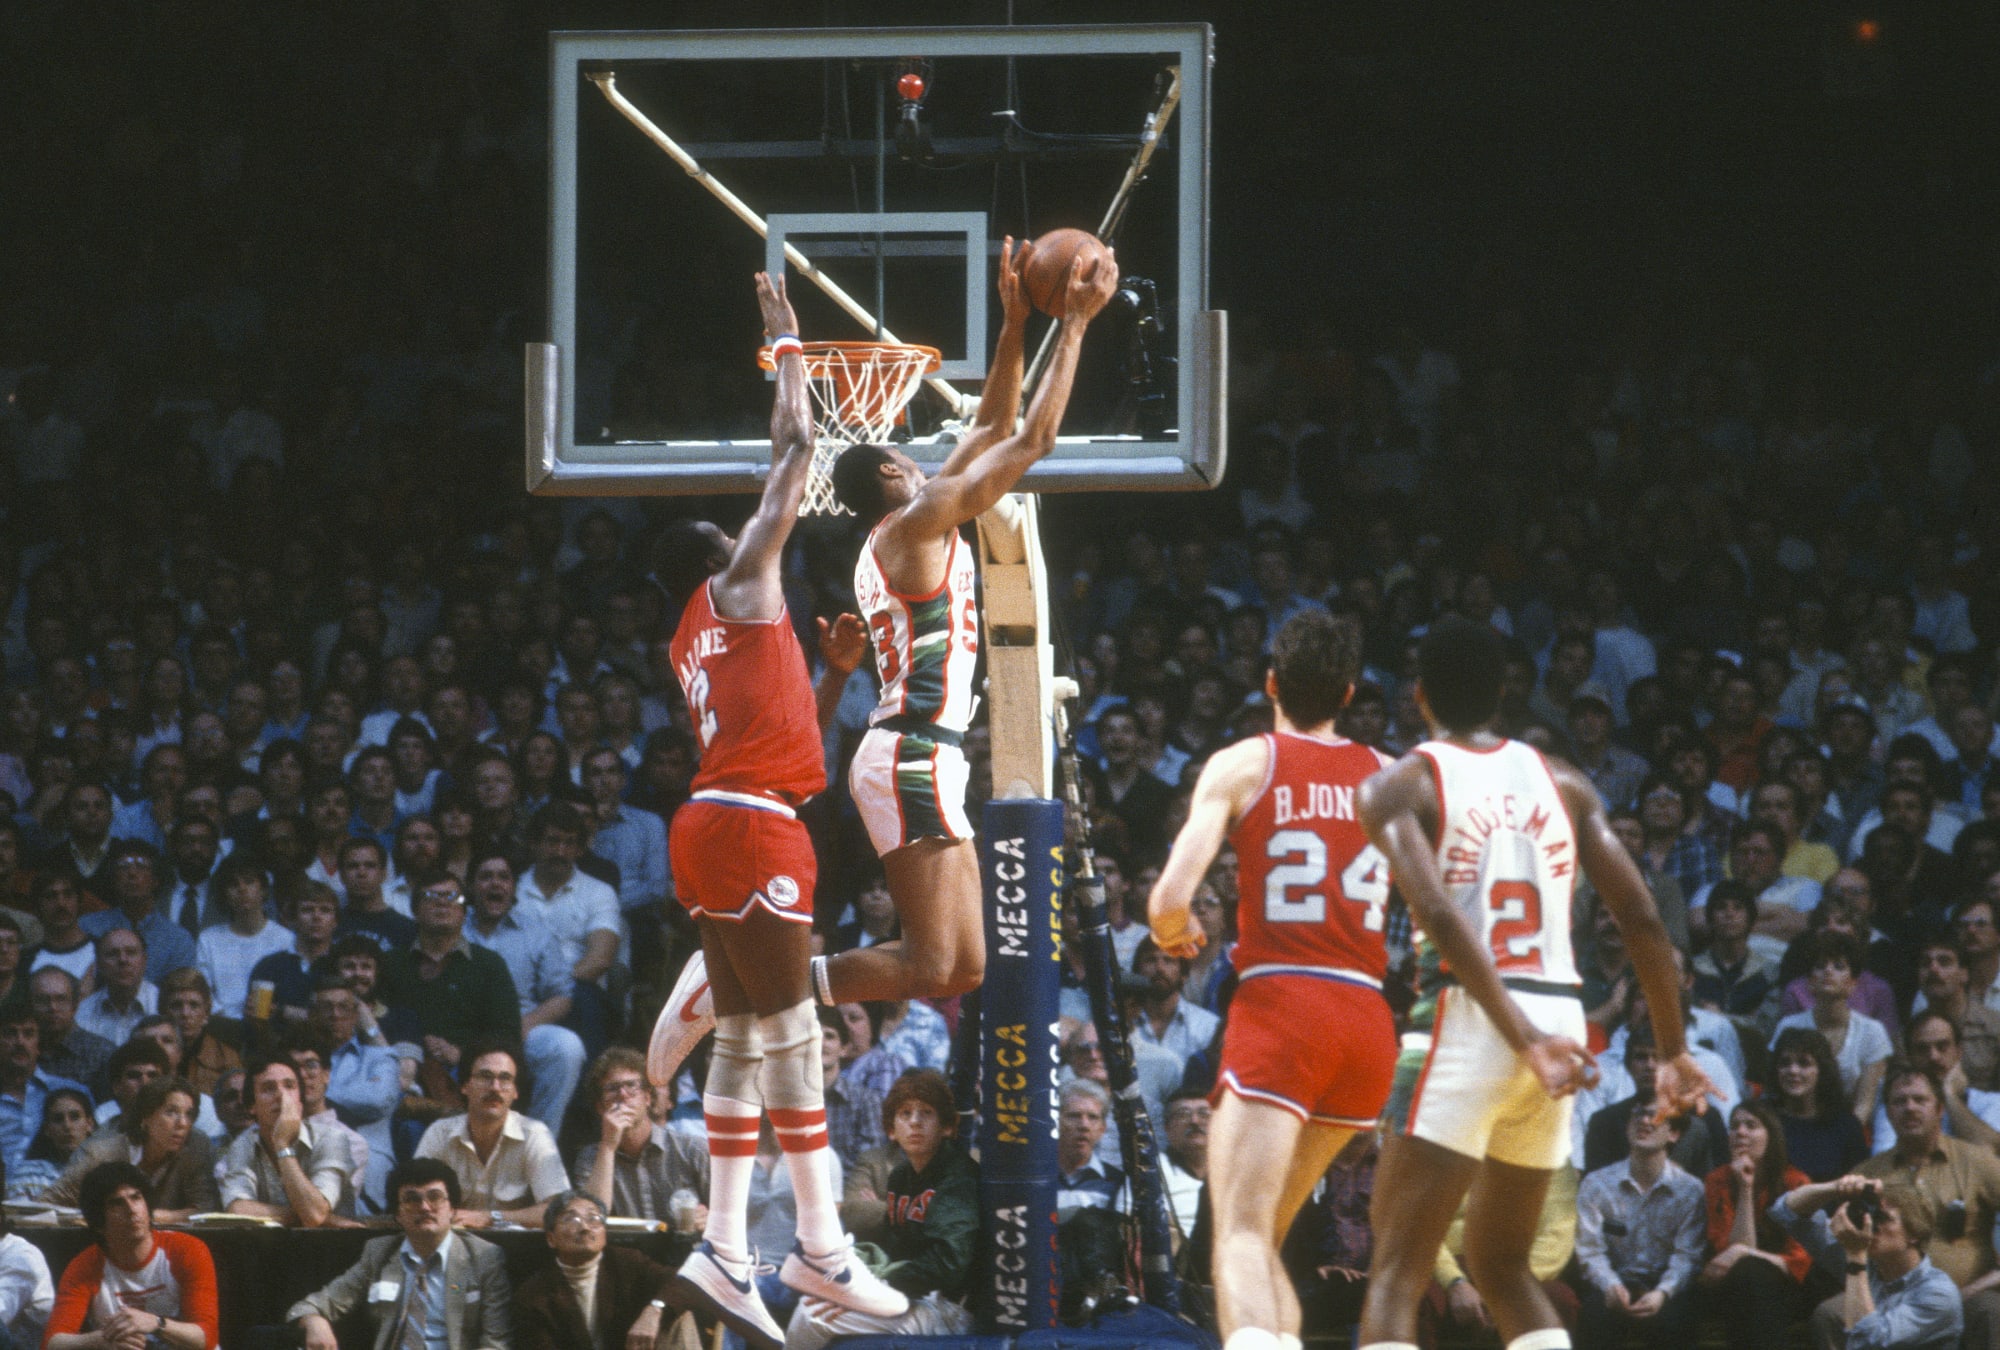 Milwaukee Bucks: 49 years in 49 days - 1982-83 season